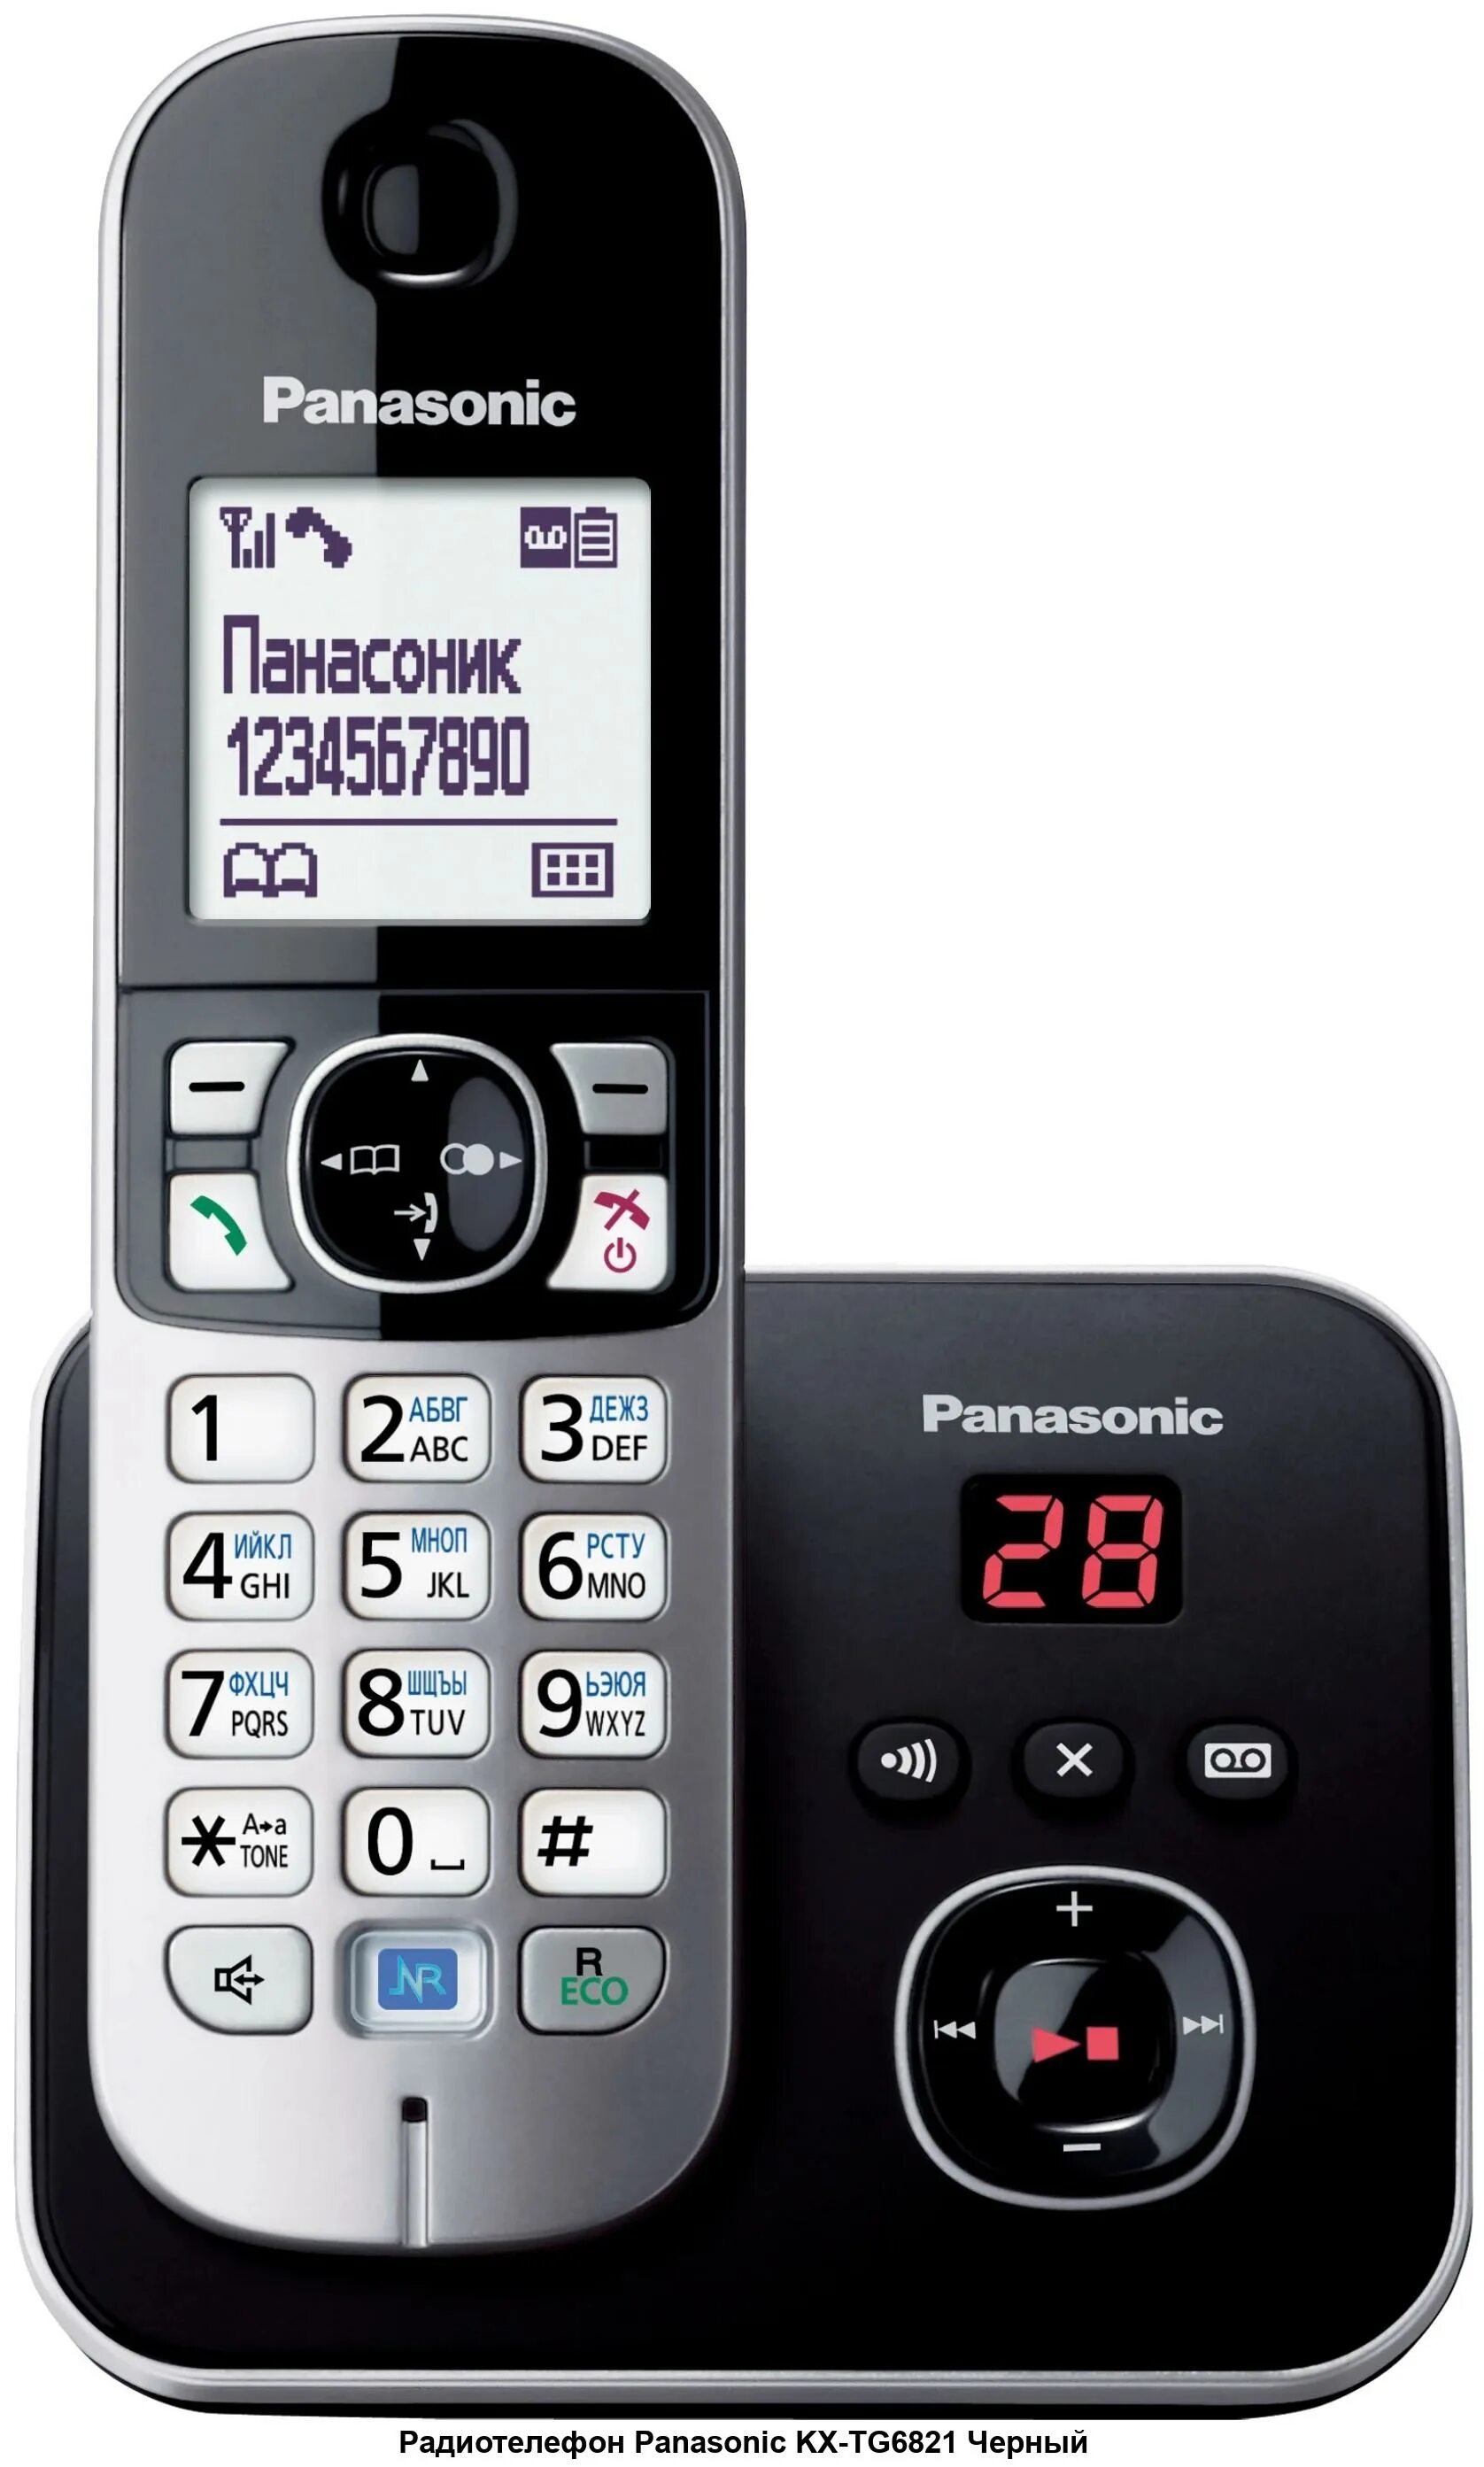 Panasonic kx tg6811rub. Радиотелефон Panasonic KX-tg6811rub. DECT Panasonic KX-tg6811rub. Радиотелефон Panasonic KX-tg6821rub. Радиотелефон Panasonic KX-tg6811.